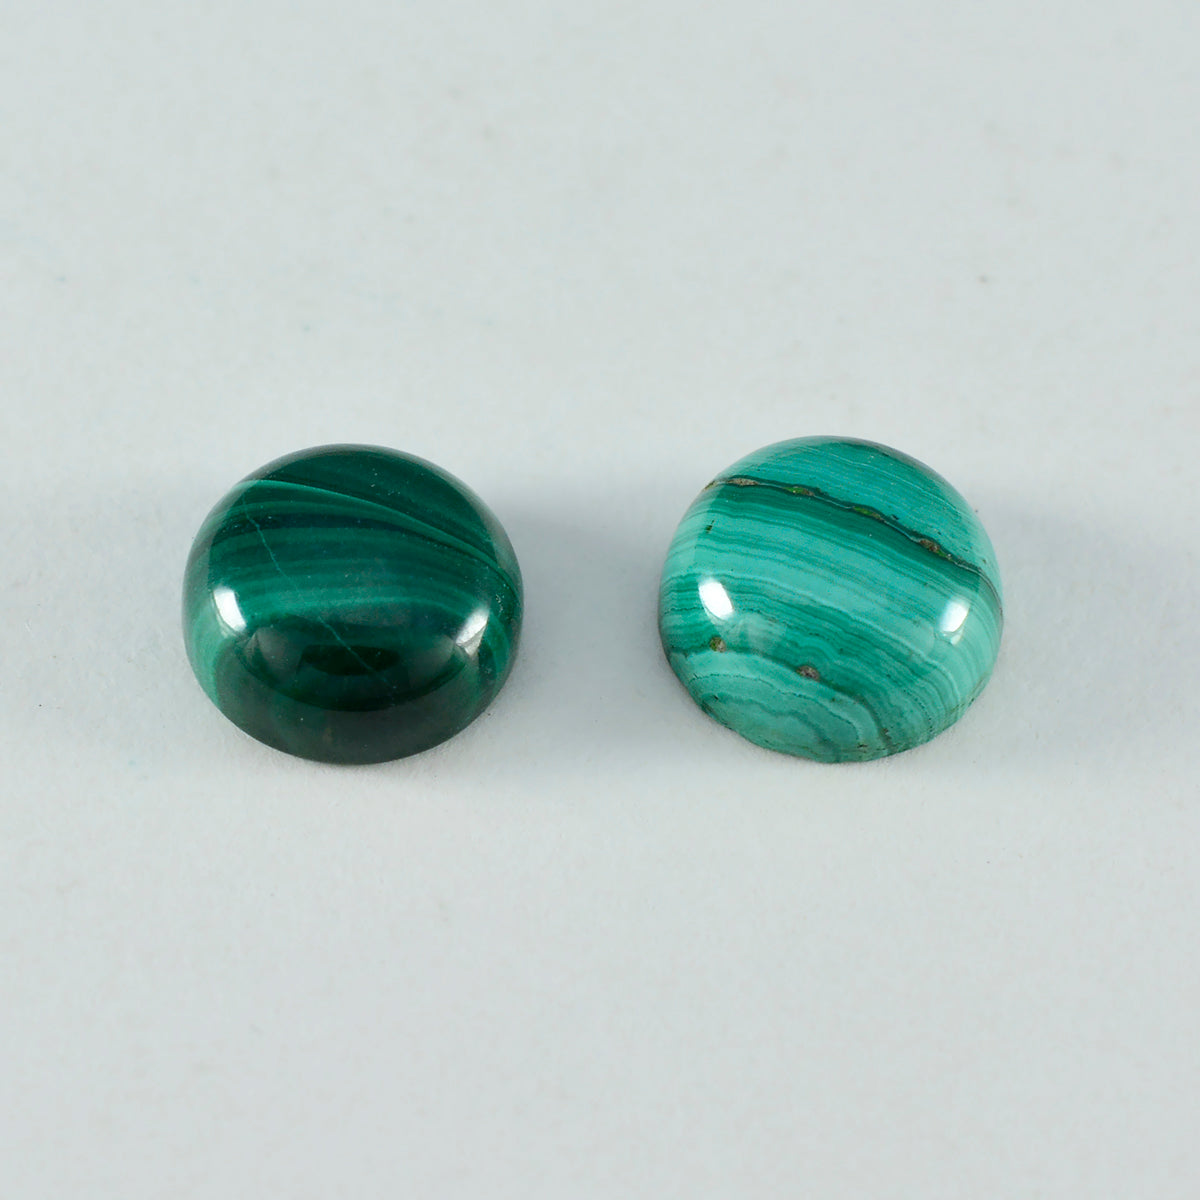 Riyogems 1PC Green Malachite Cabochon 12x12 mm Round Shape fantastic Quality Stone